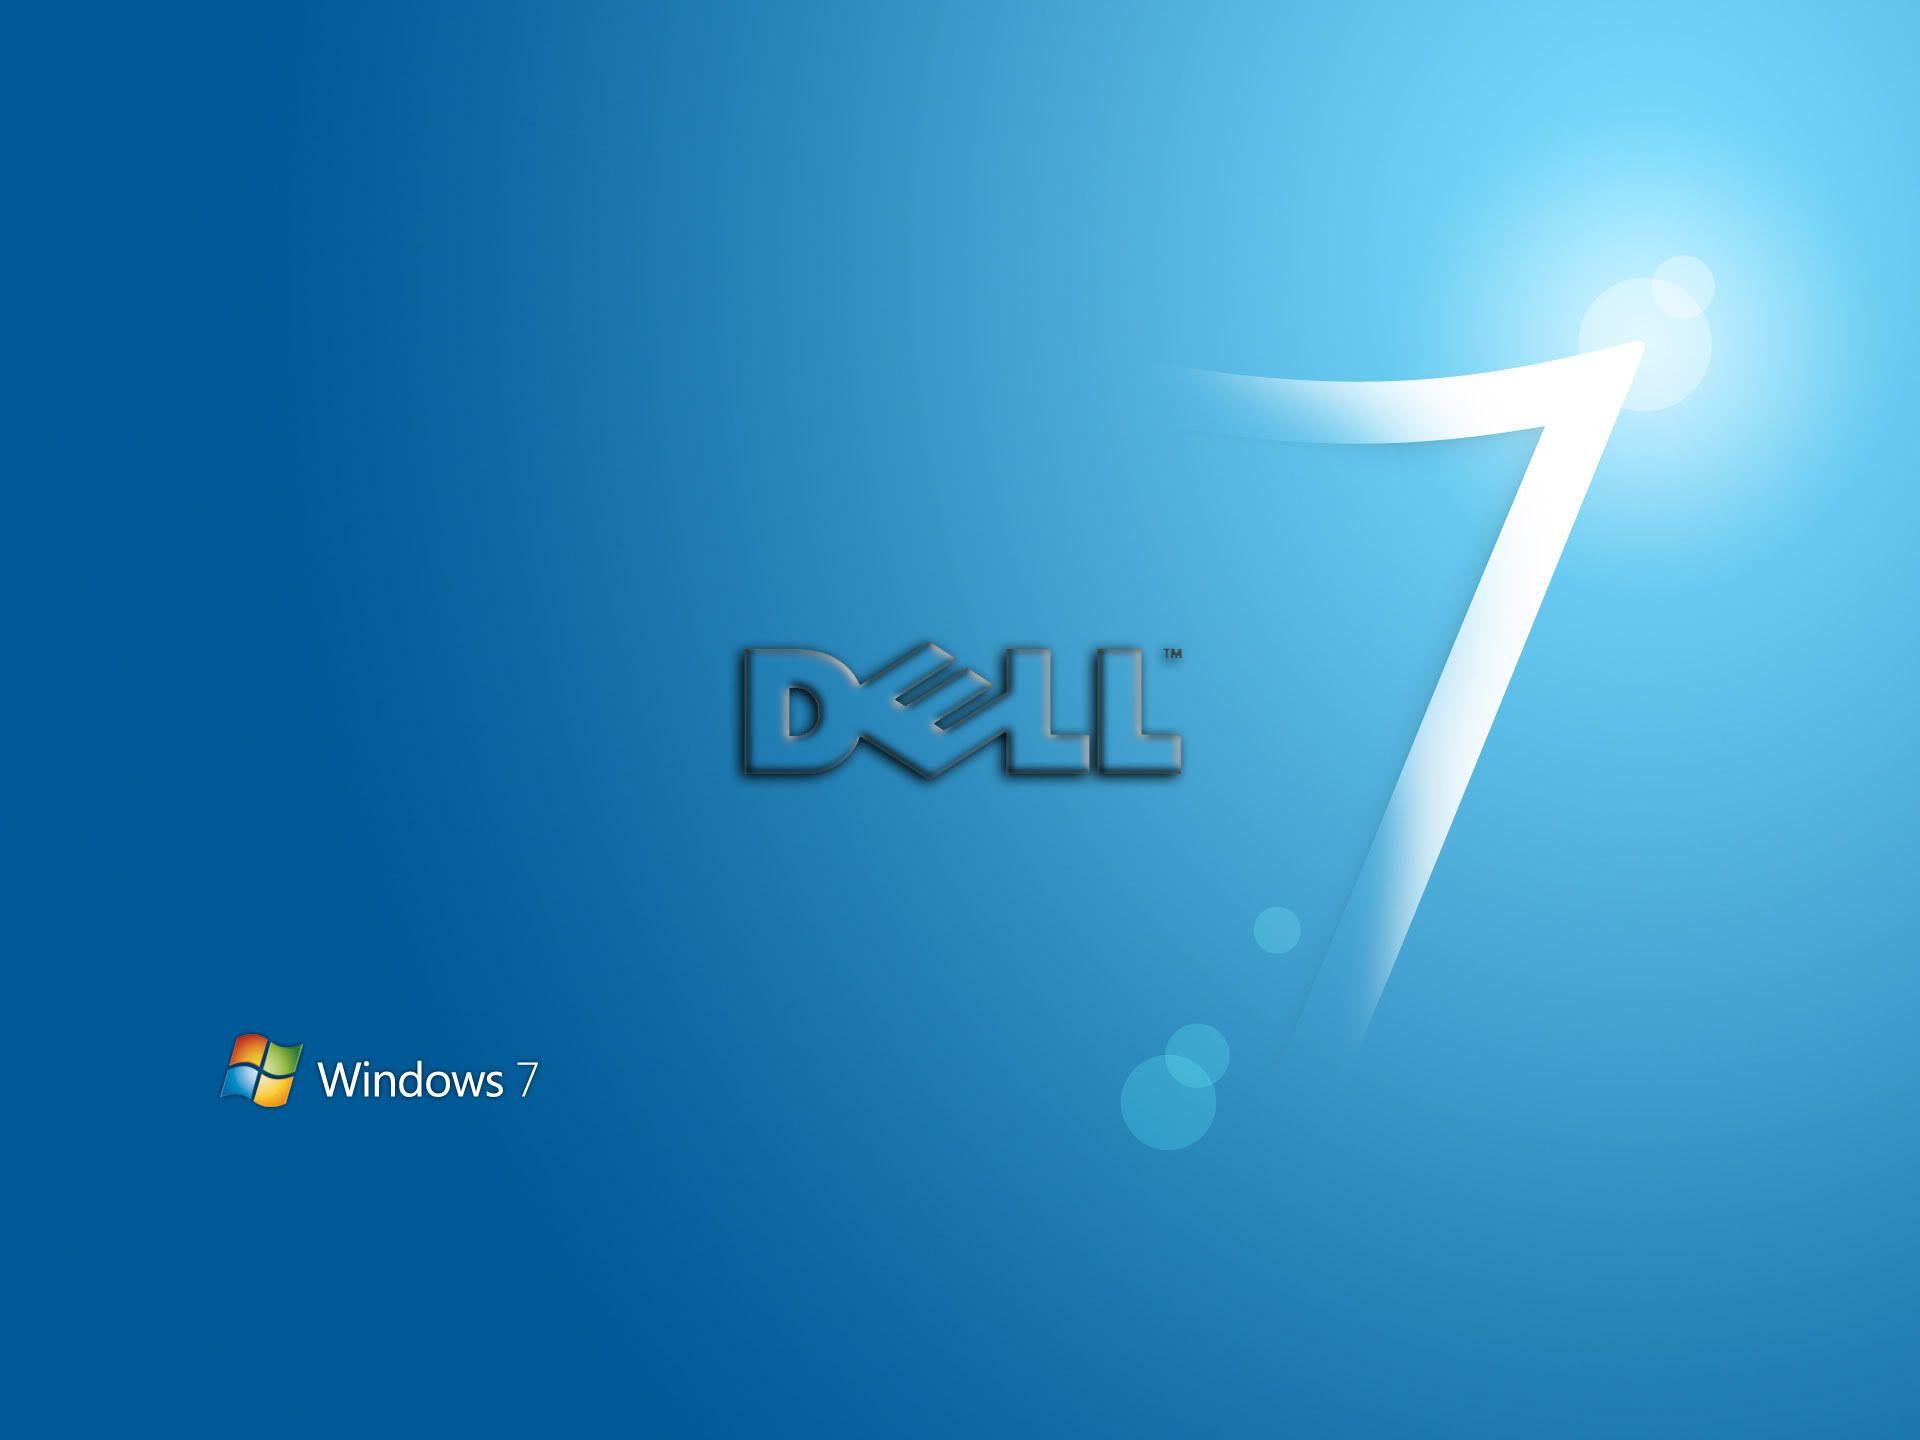 Hd Dell Wallpaper Windows Desktop Dell Windows Background Brands